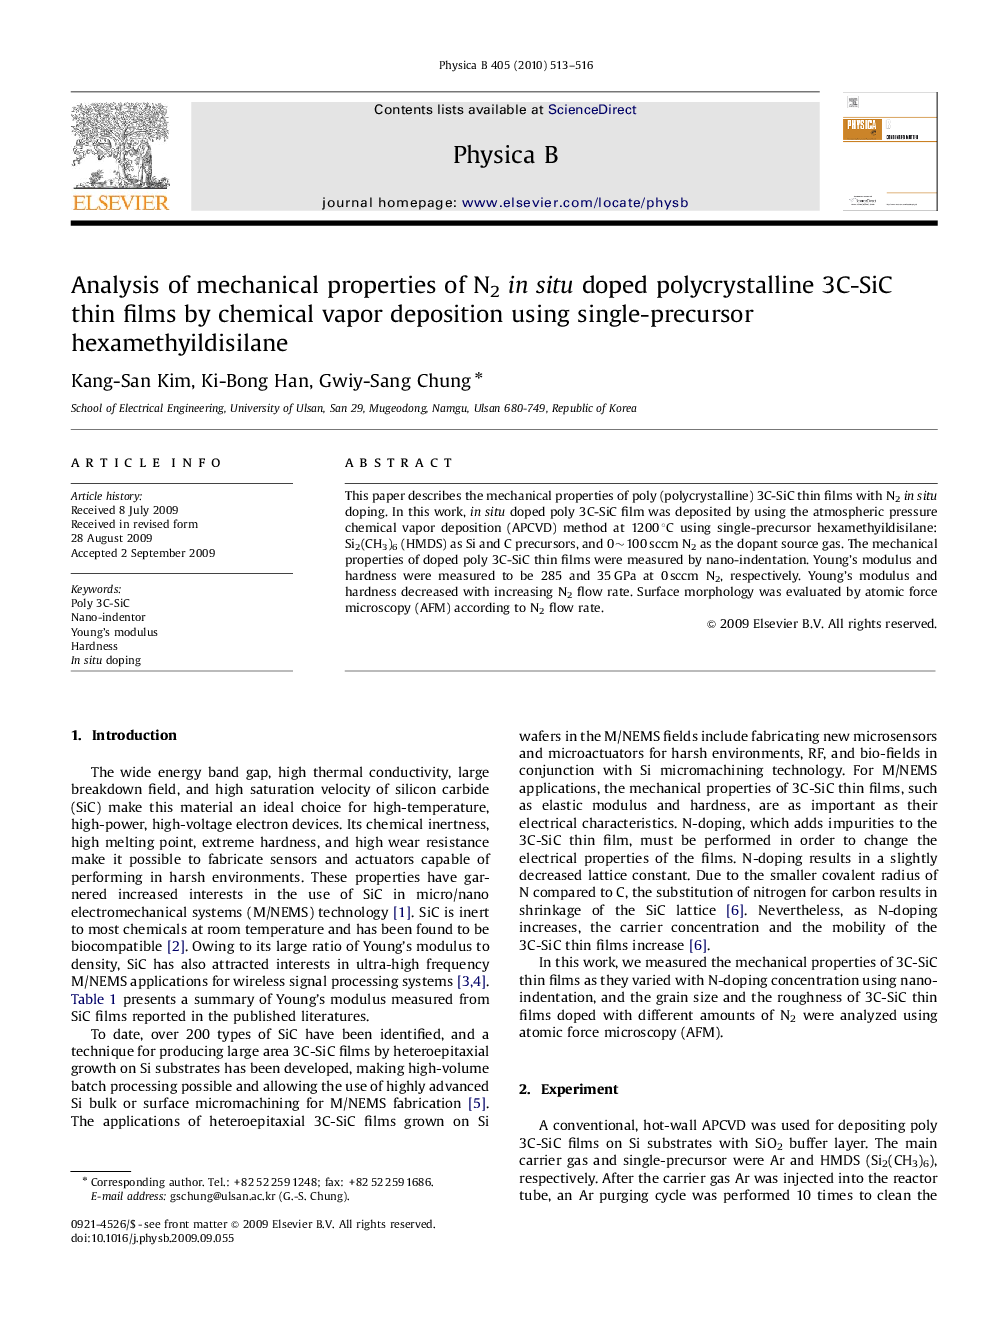 Analysis of mechanical properties of N2in situ doped polycrystalline 3C-SiC thin films by chemical vapor deposition using single-precursor hexamethyildisilane